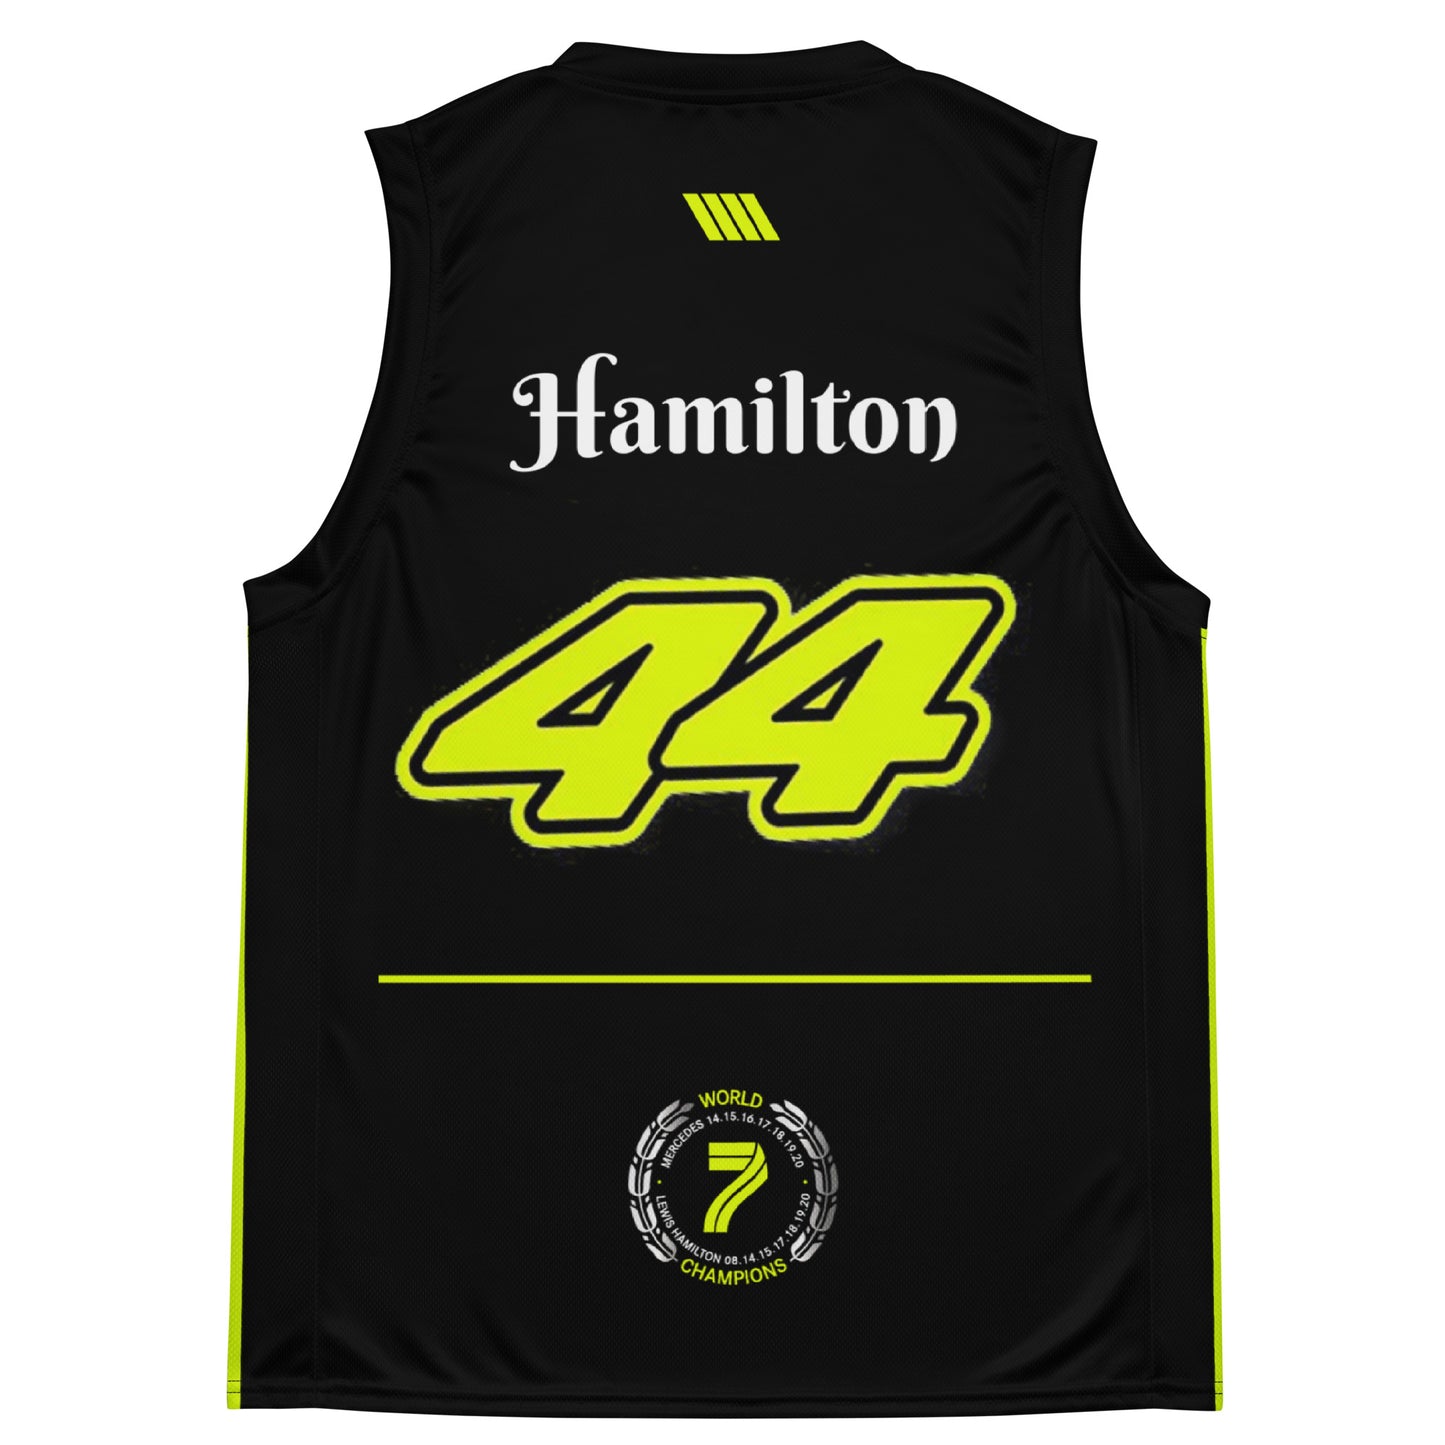 Lewis Hamilton Recycled unisex basketball jersey